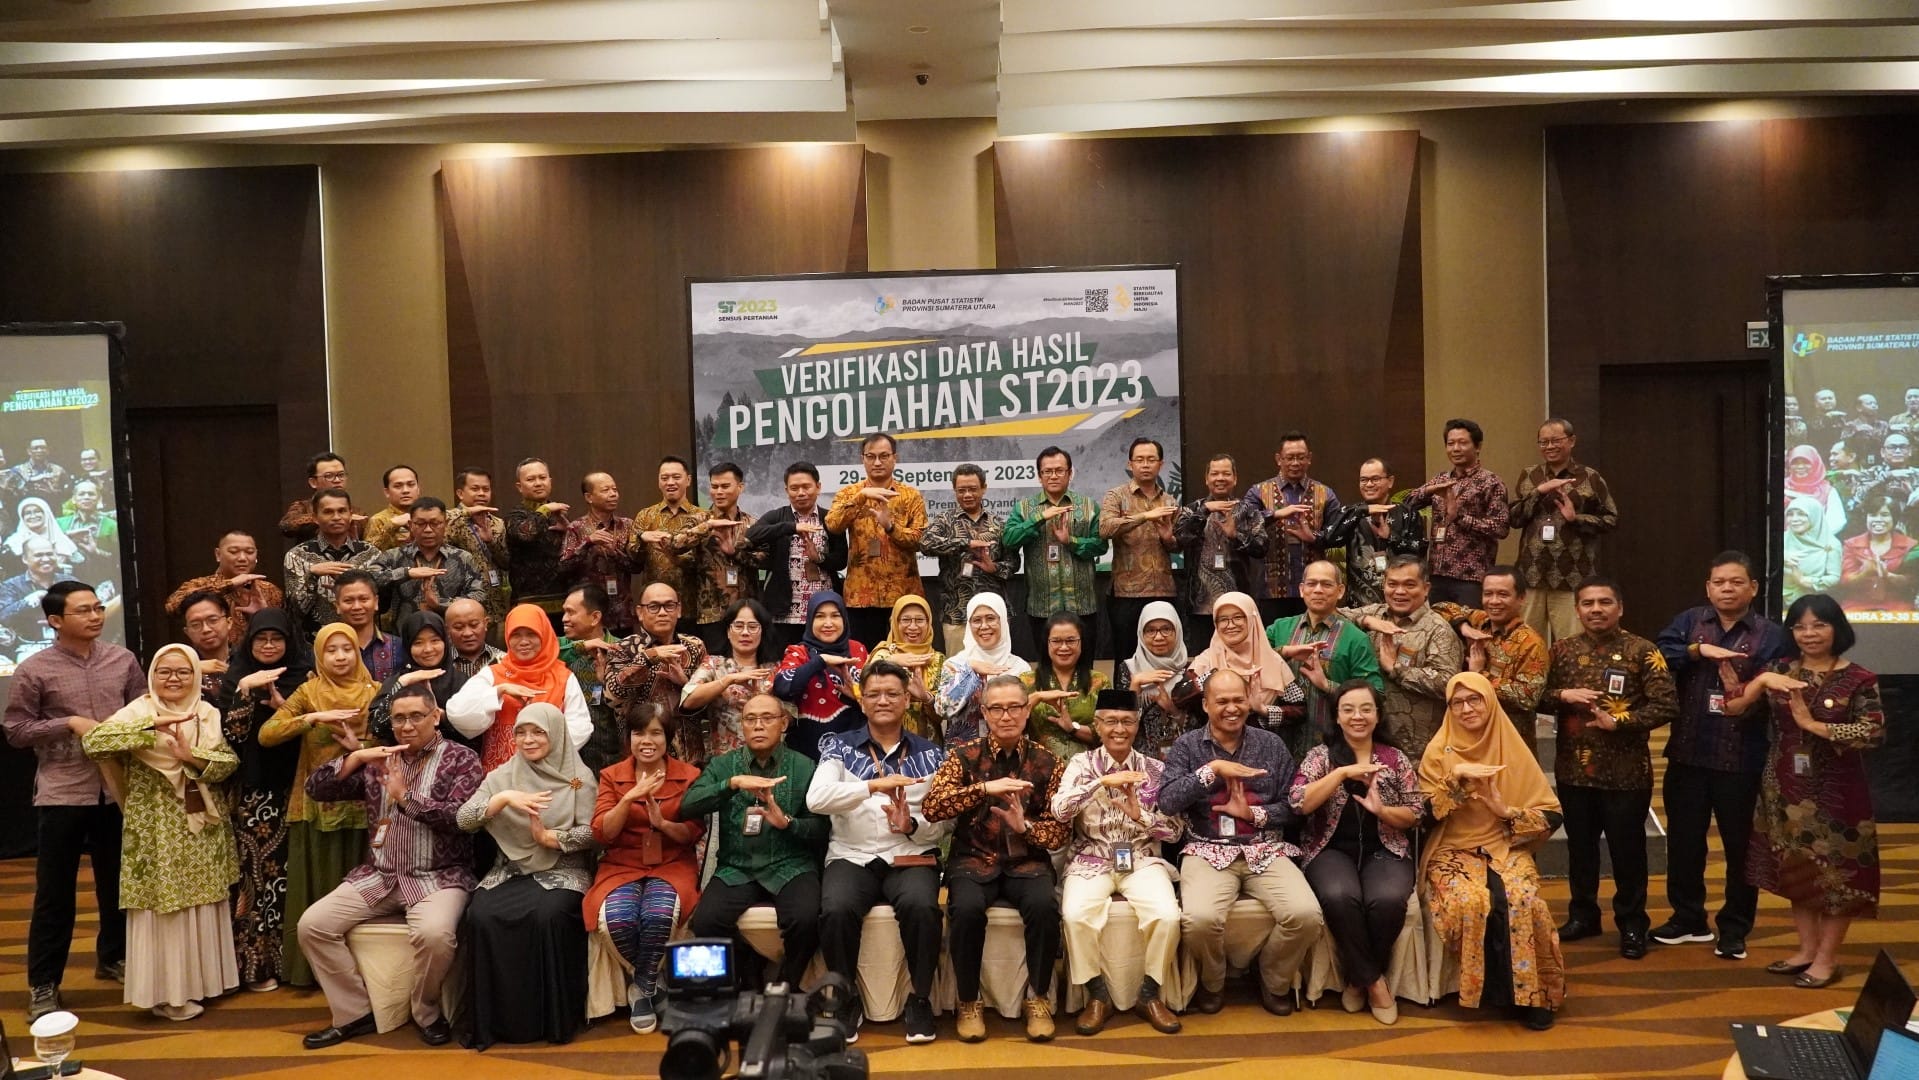 Verifikasi Hasil Pengolahan ST2023 Provinsi Sumatera Utara